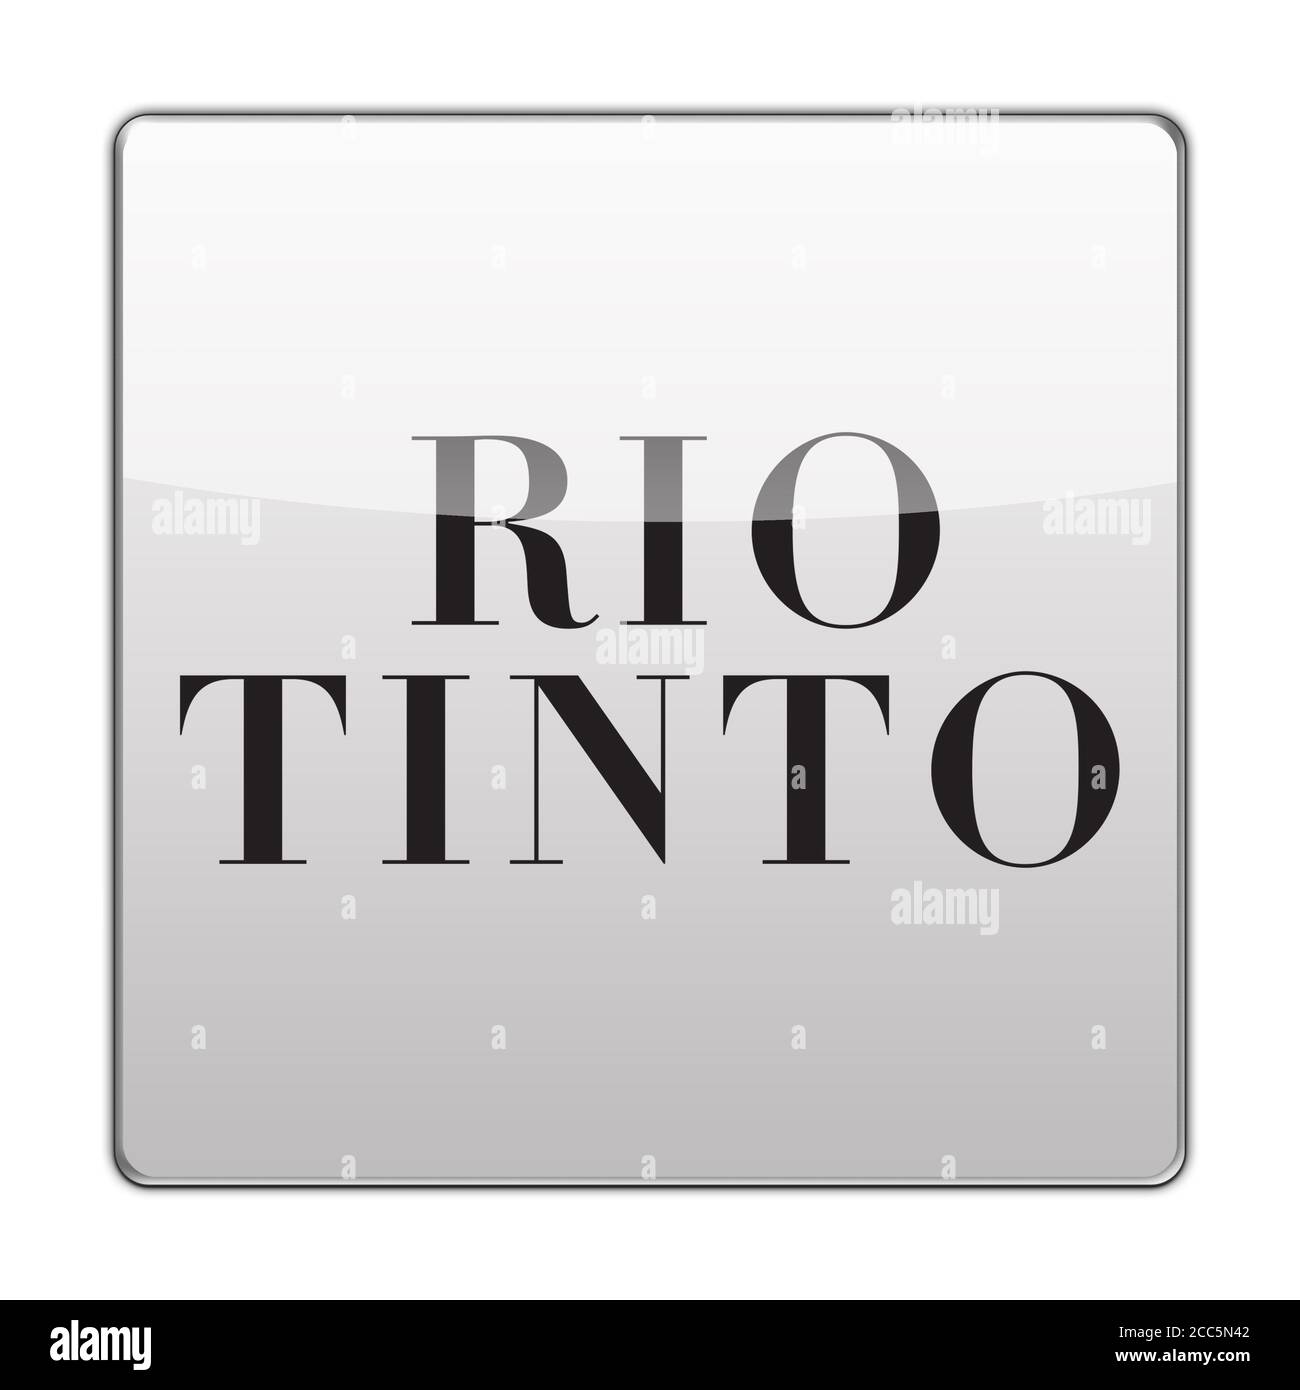 Rio Tinto Stock Photo